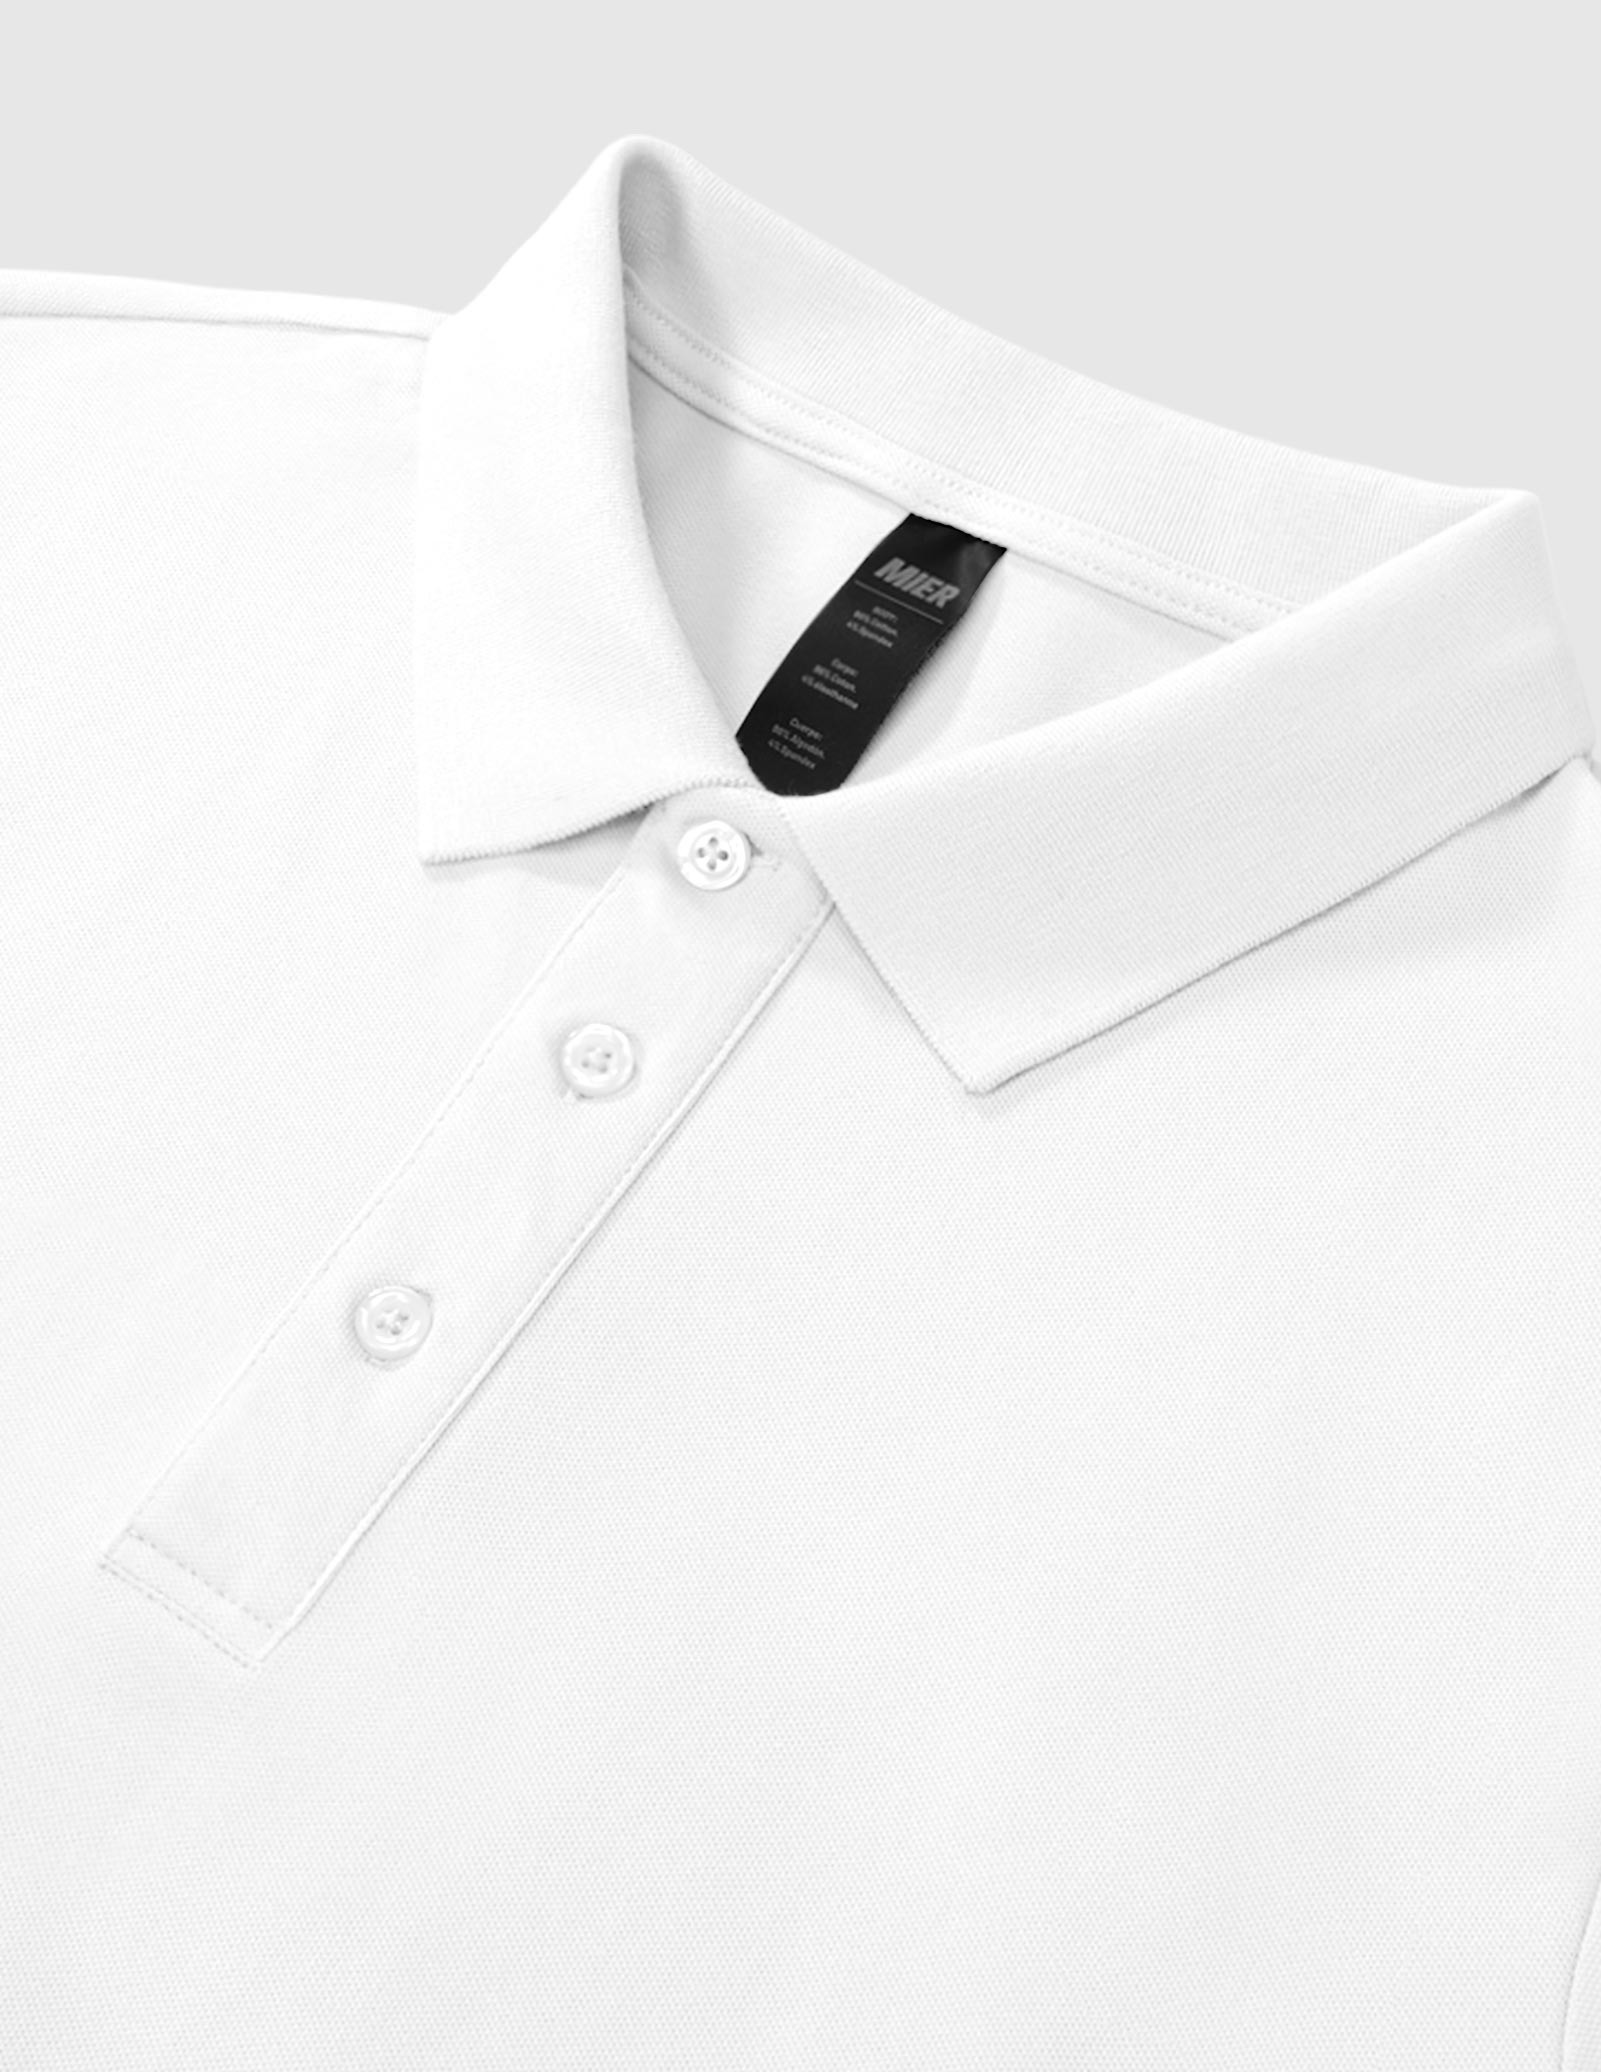 Men's Cotton Polo Shirts Short Sleeve Golf Tennis Collared Shirt